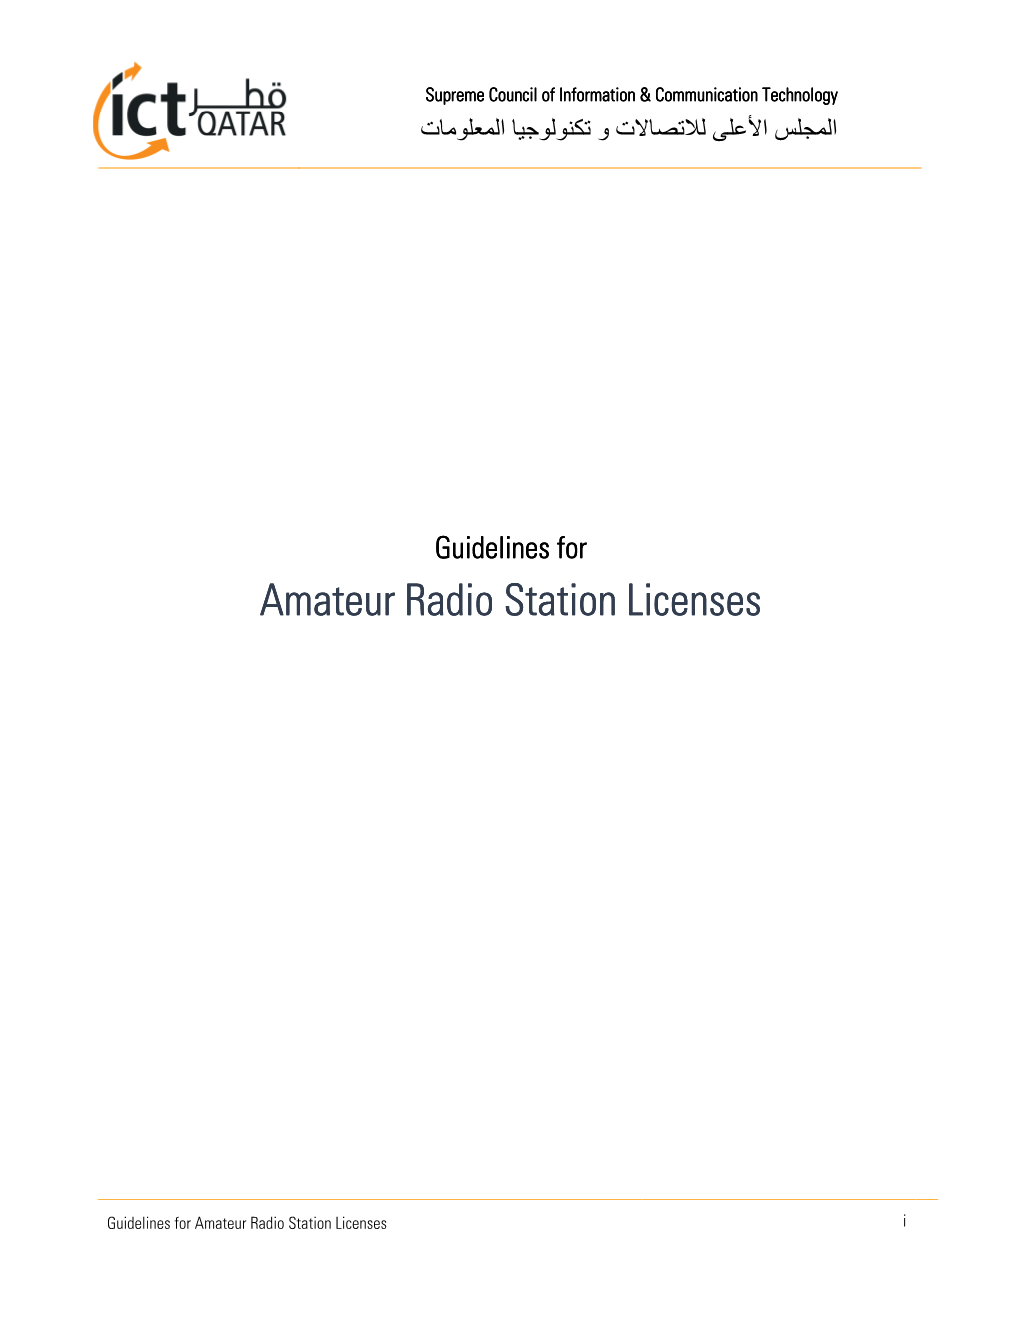 Amateur Radio Station Licenses I